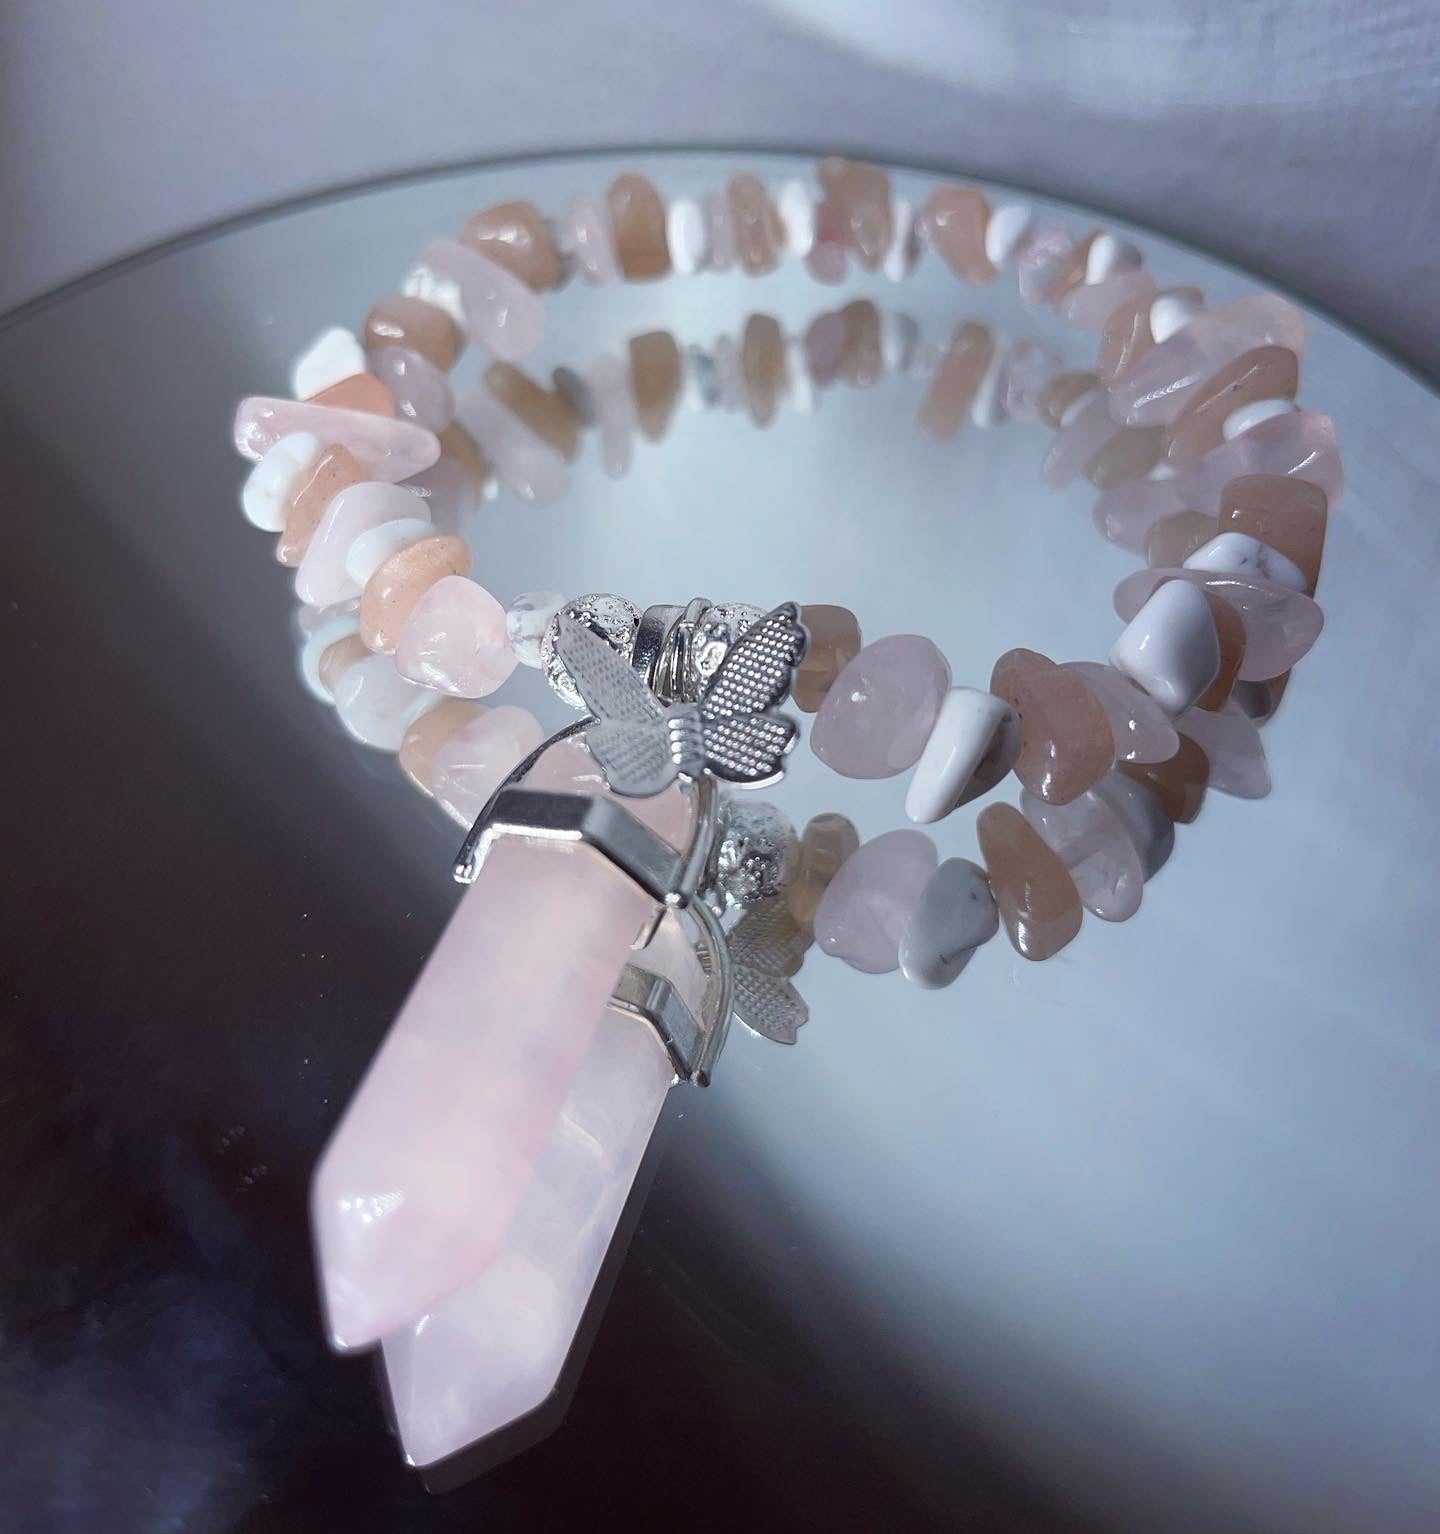 rose Quartz butterfly pendant bracelet sunstone, howlite and rose quartz crystals